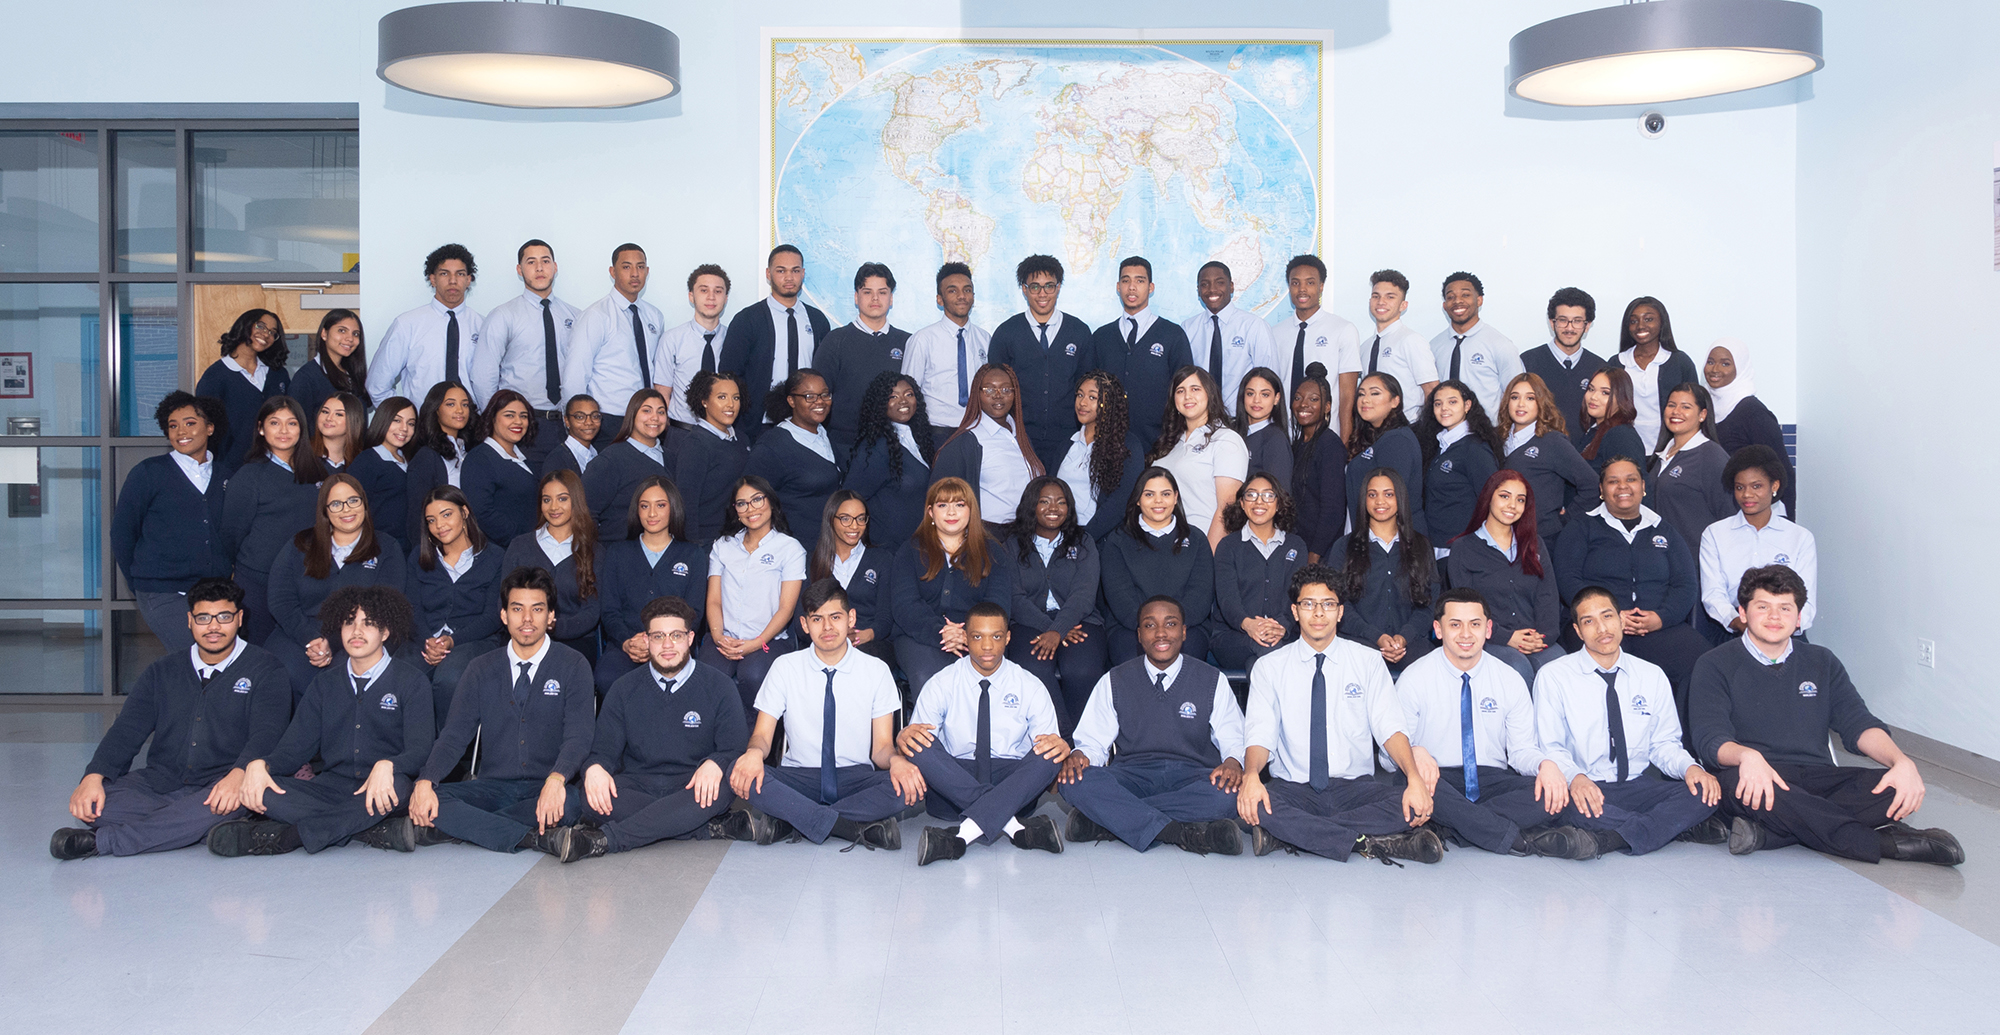 International Leadership Charter High School Class Photo 2020-2021